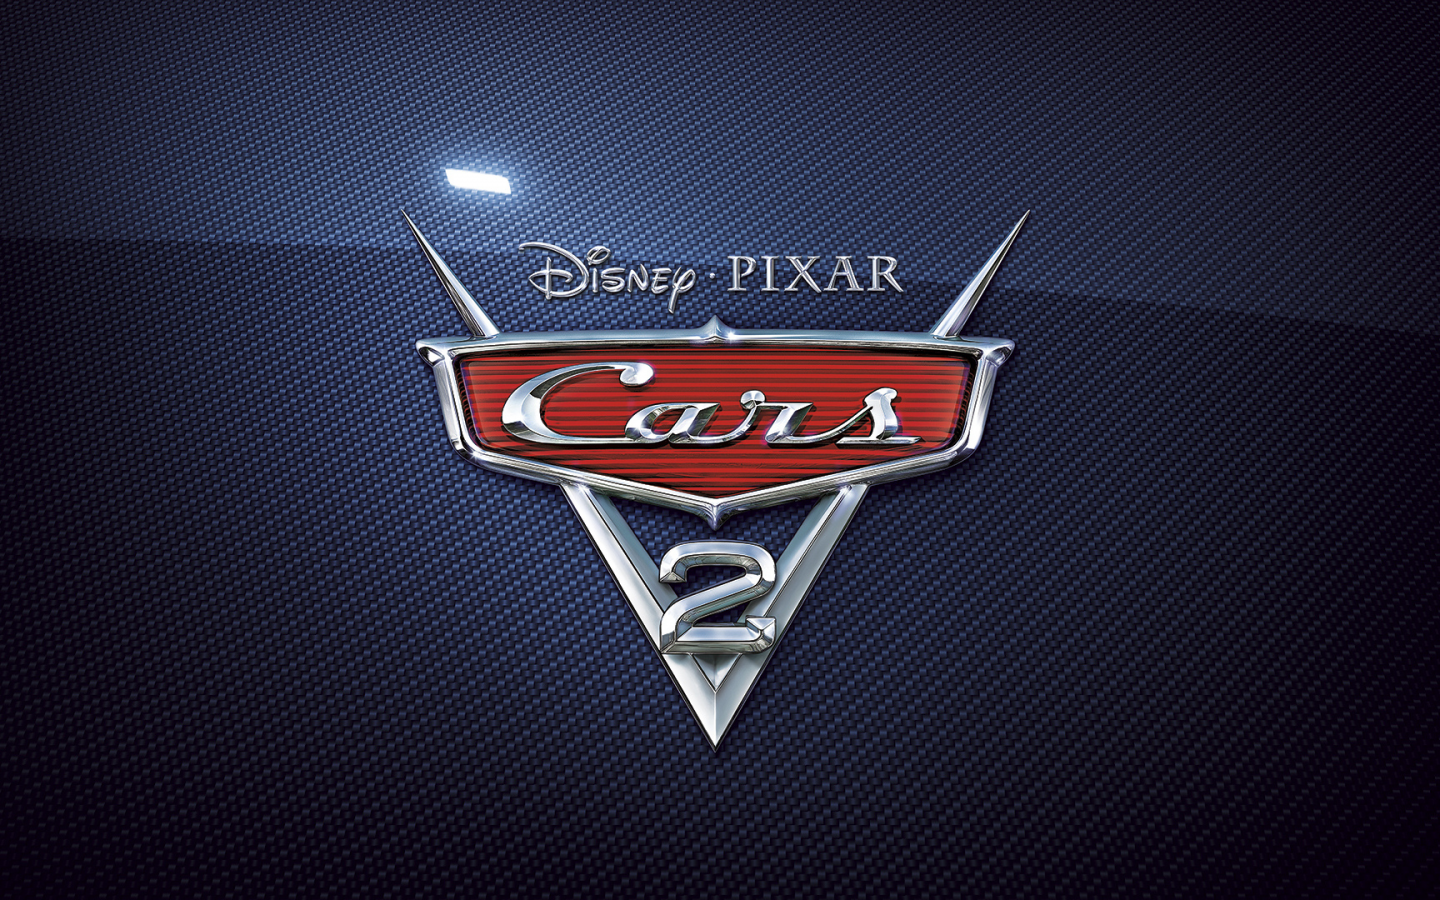 cars 2, тачки 2, мультфильм, pixar, disney